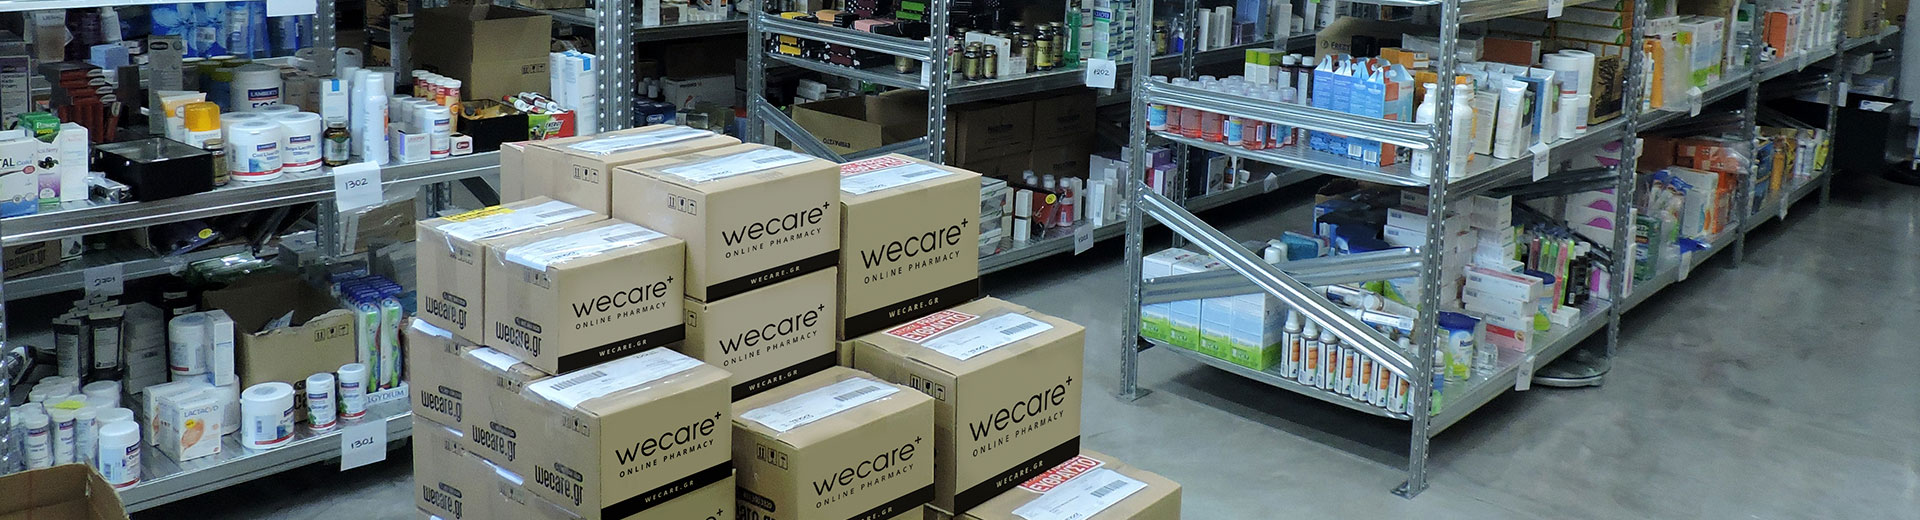 Wecare - High product storage & maintenance standards